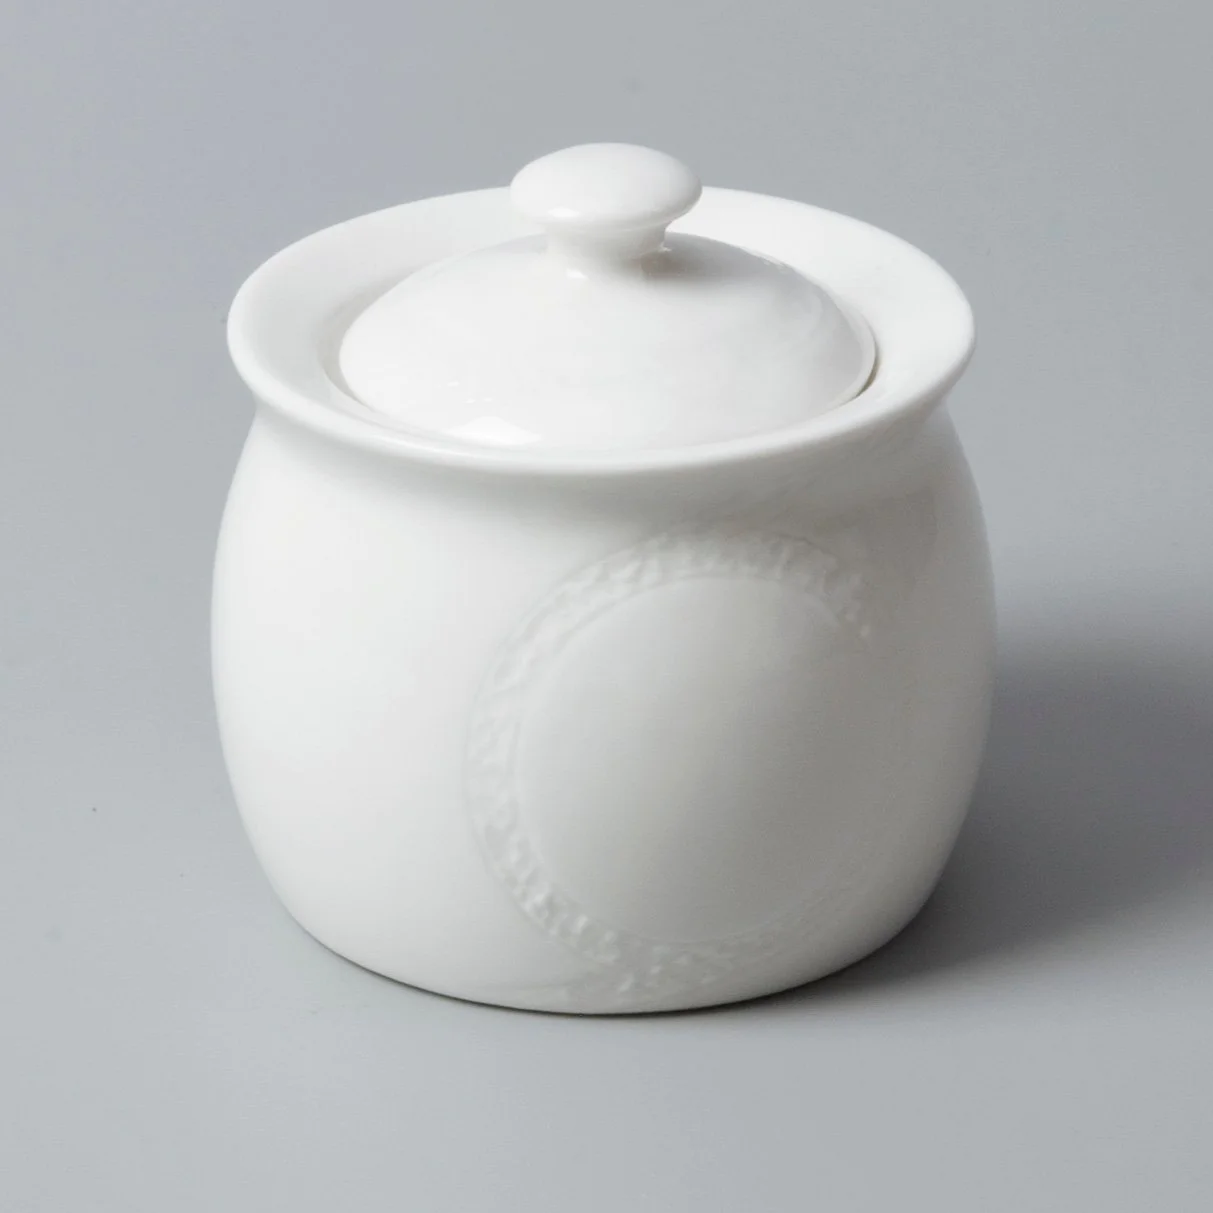 Latest best porcelain dinnerware in the world manufacturers for restaurant